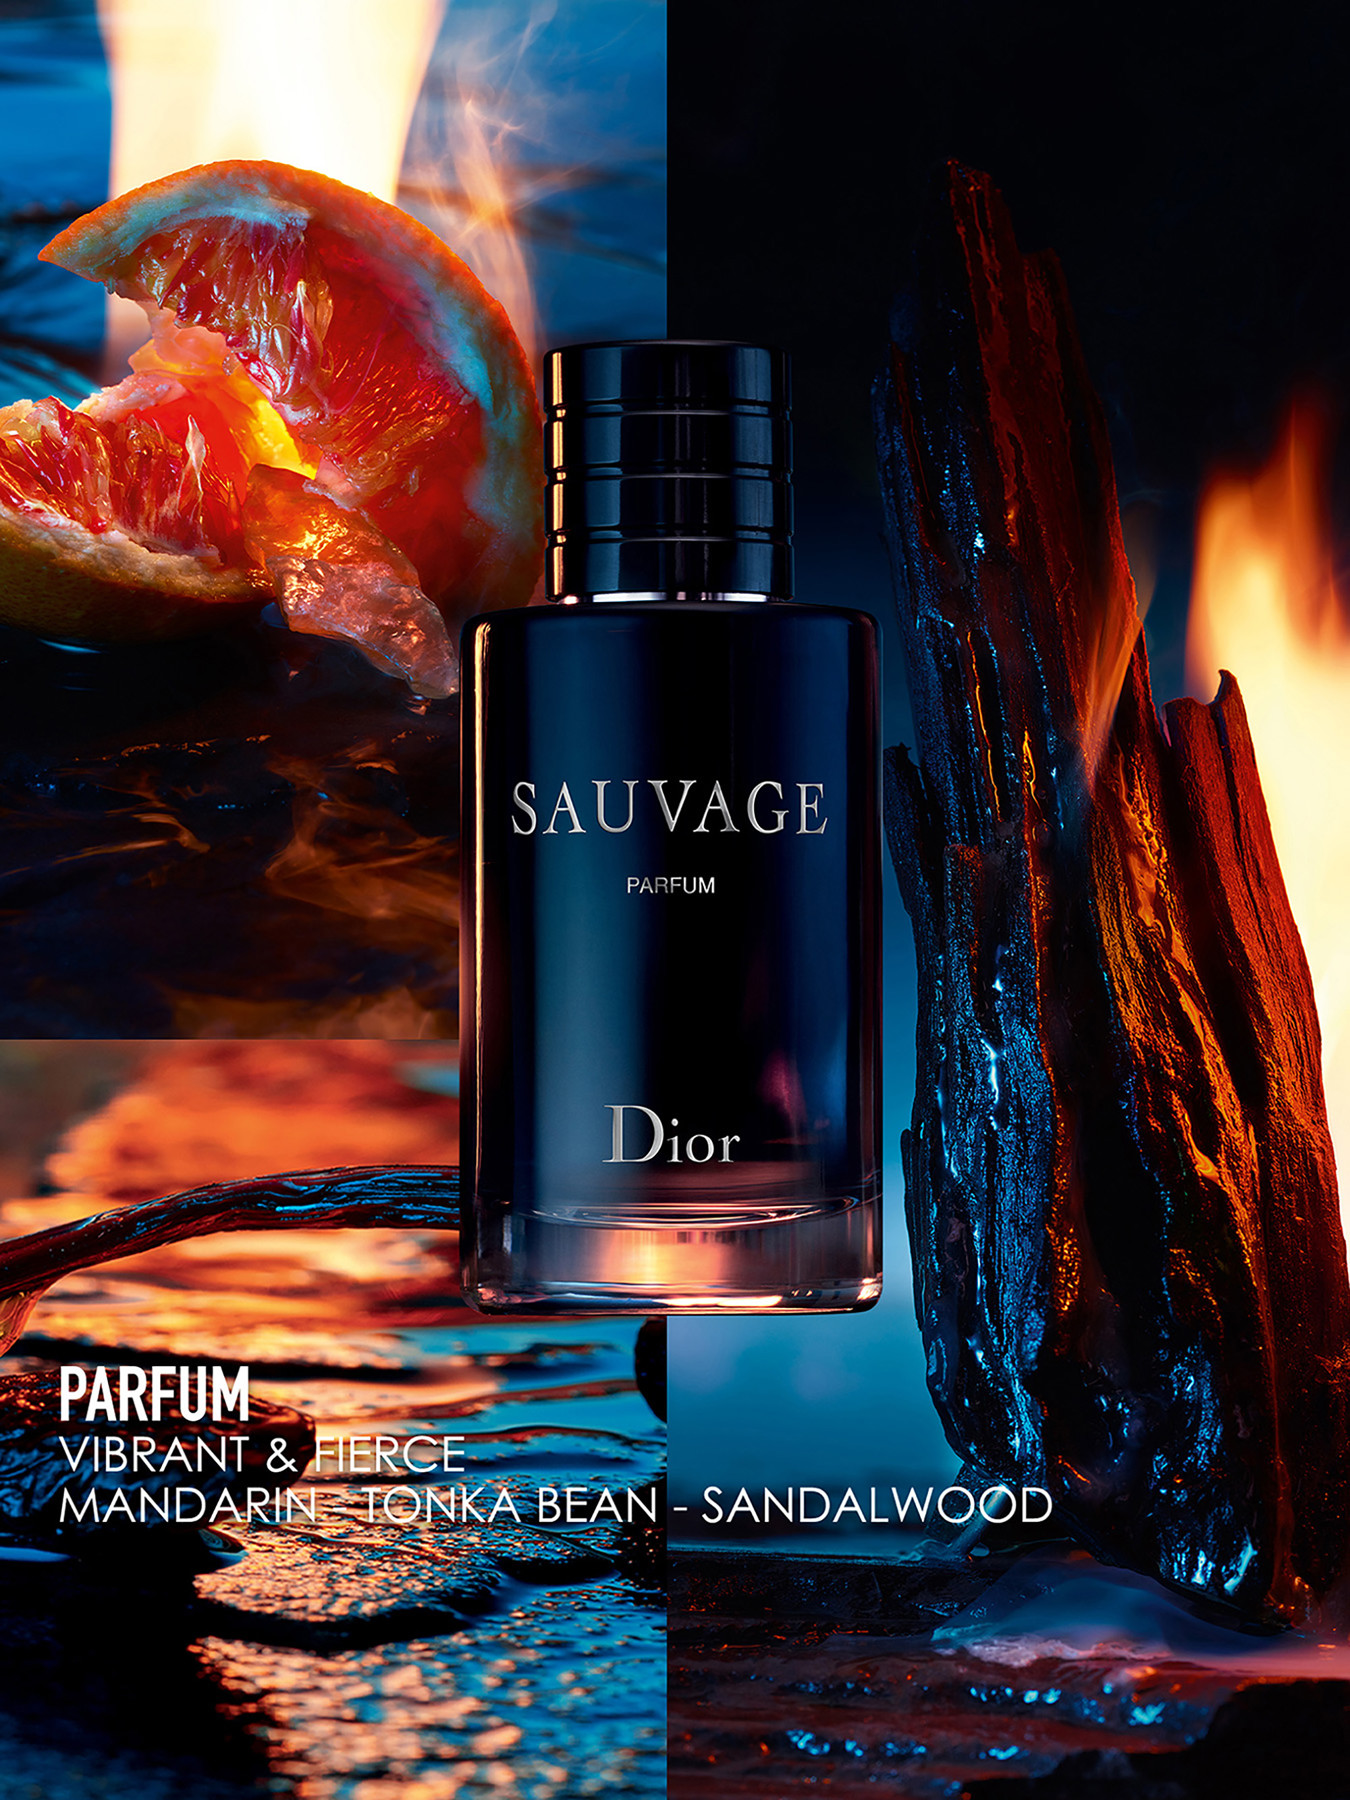 DIOR Sauvage Parfum 100ml | Fenwick